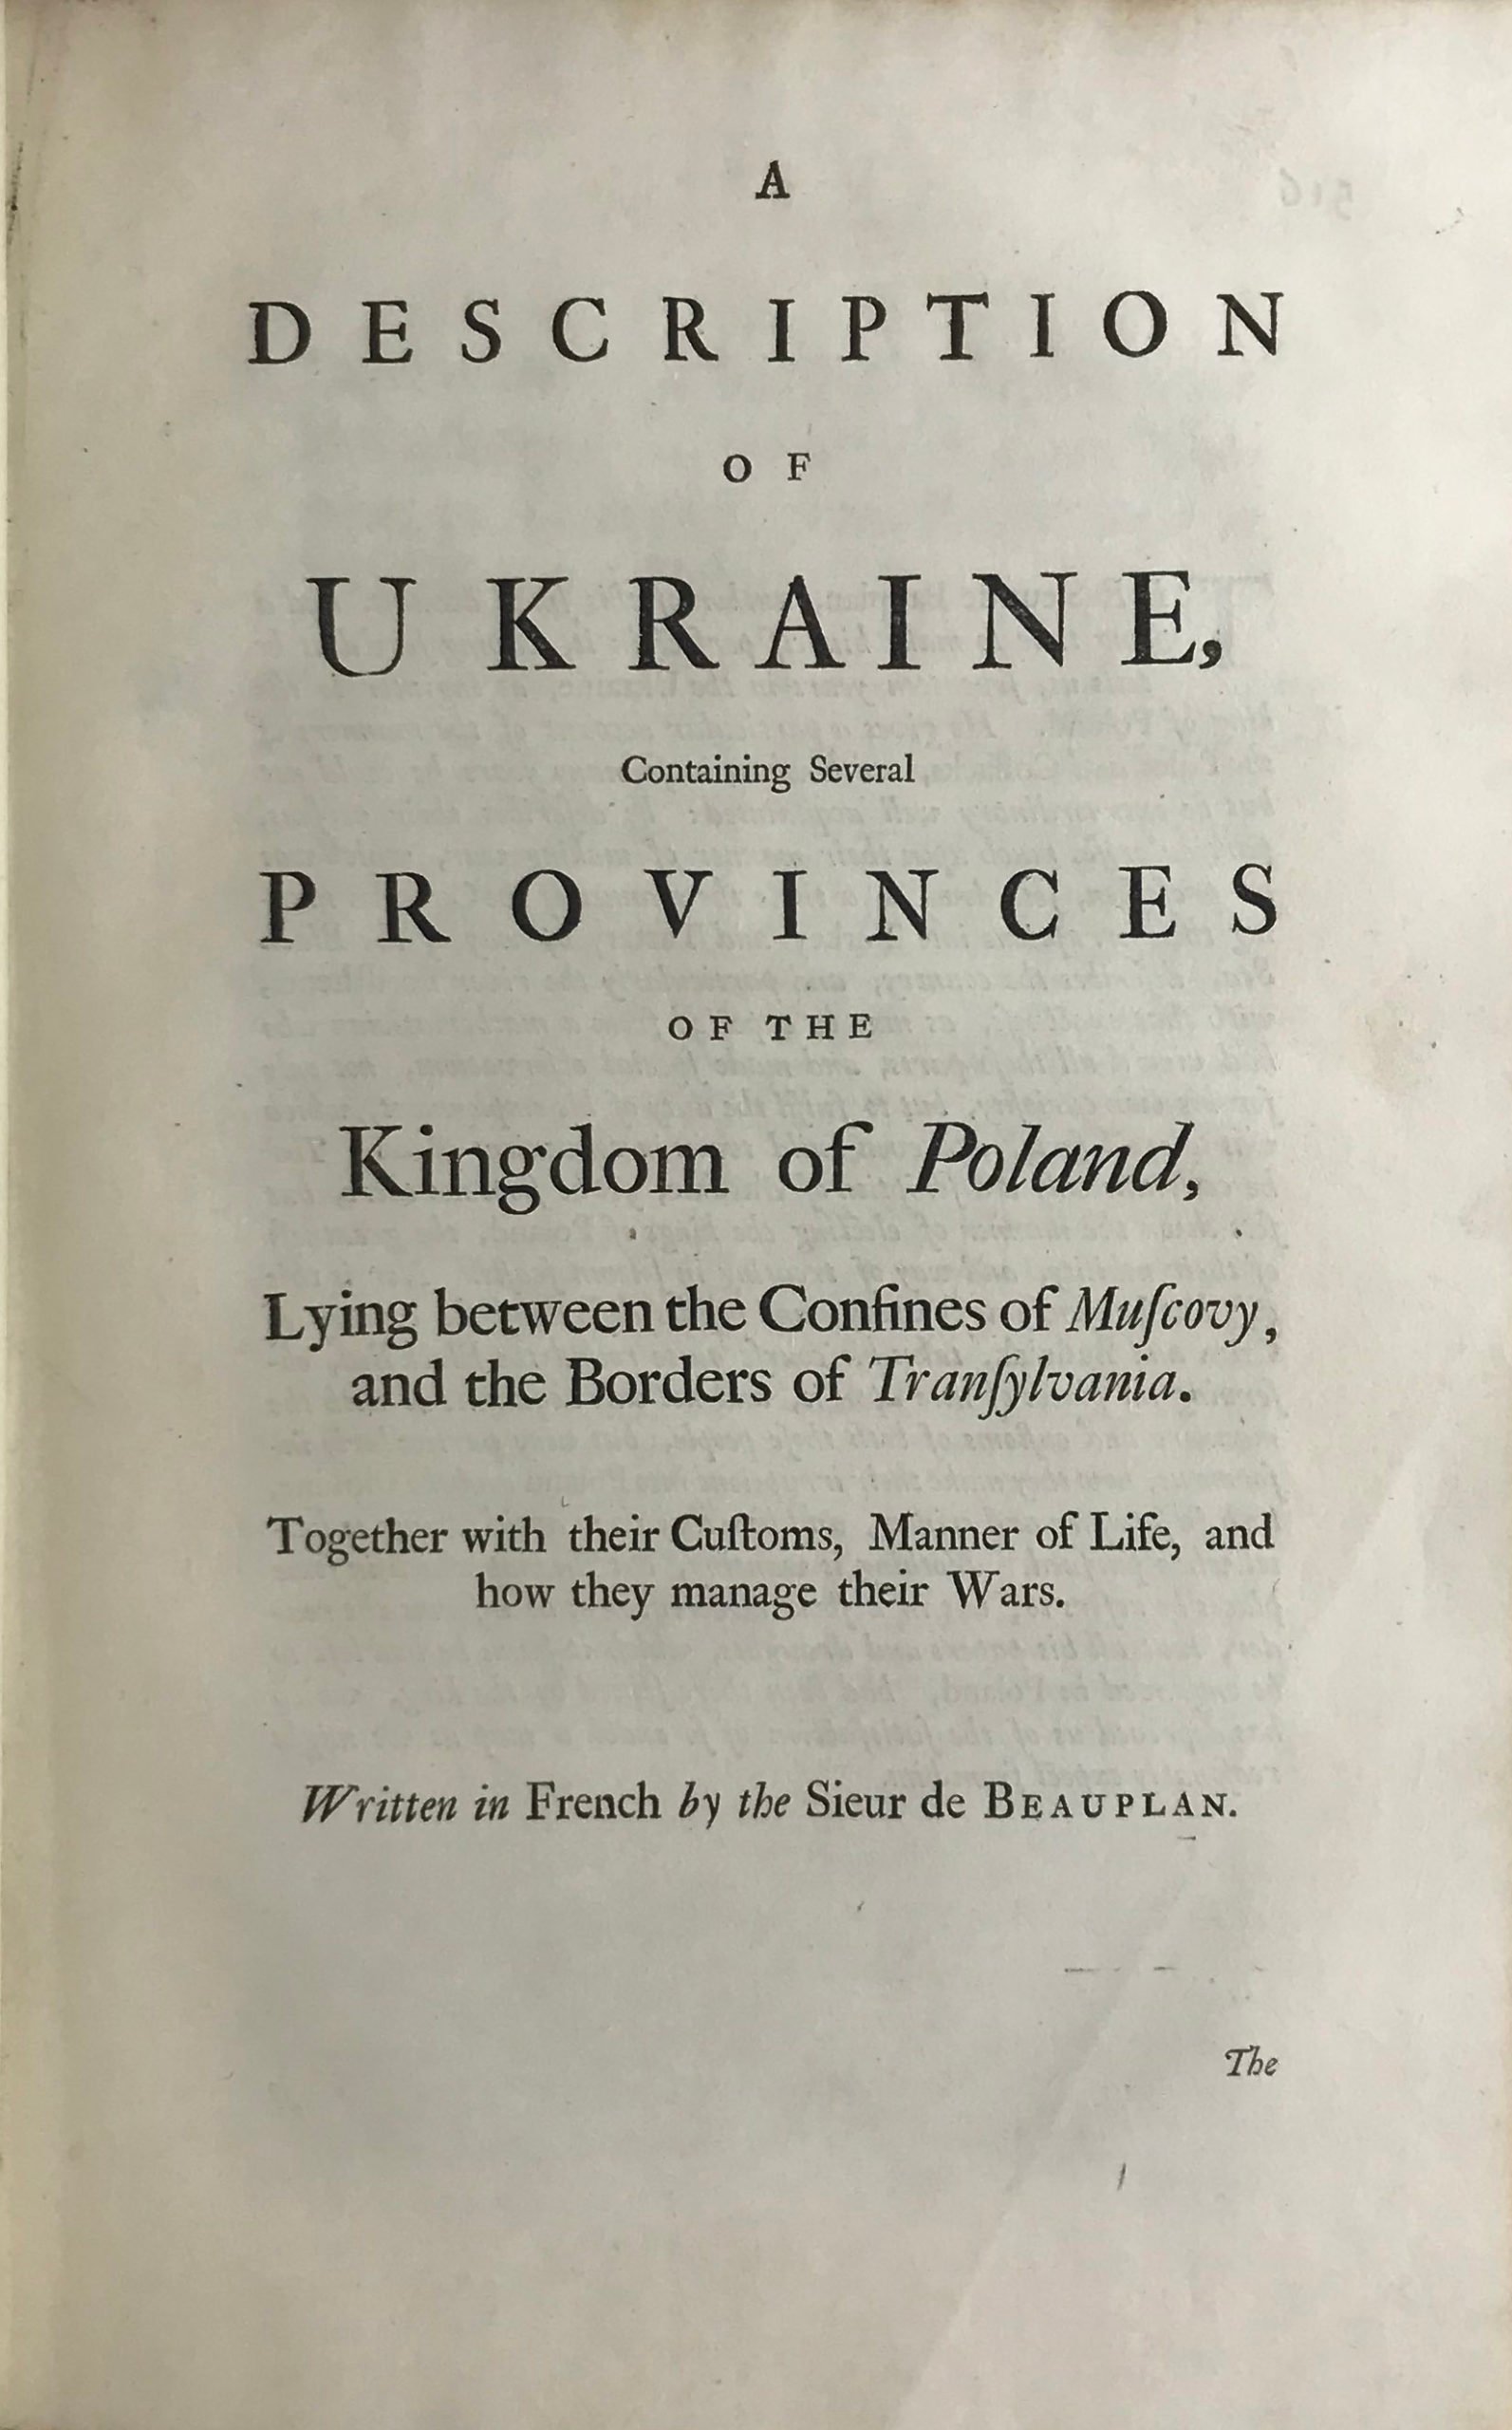 A Description of Ukranie, containing several provinces of the Kingdom of Poland …, London, 1704.